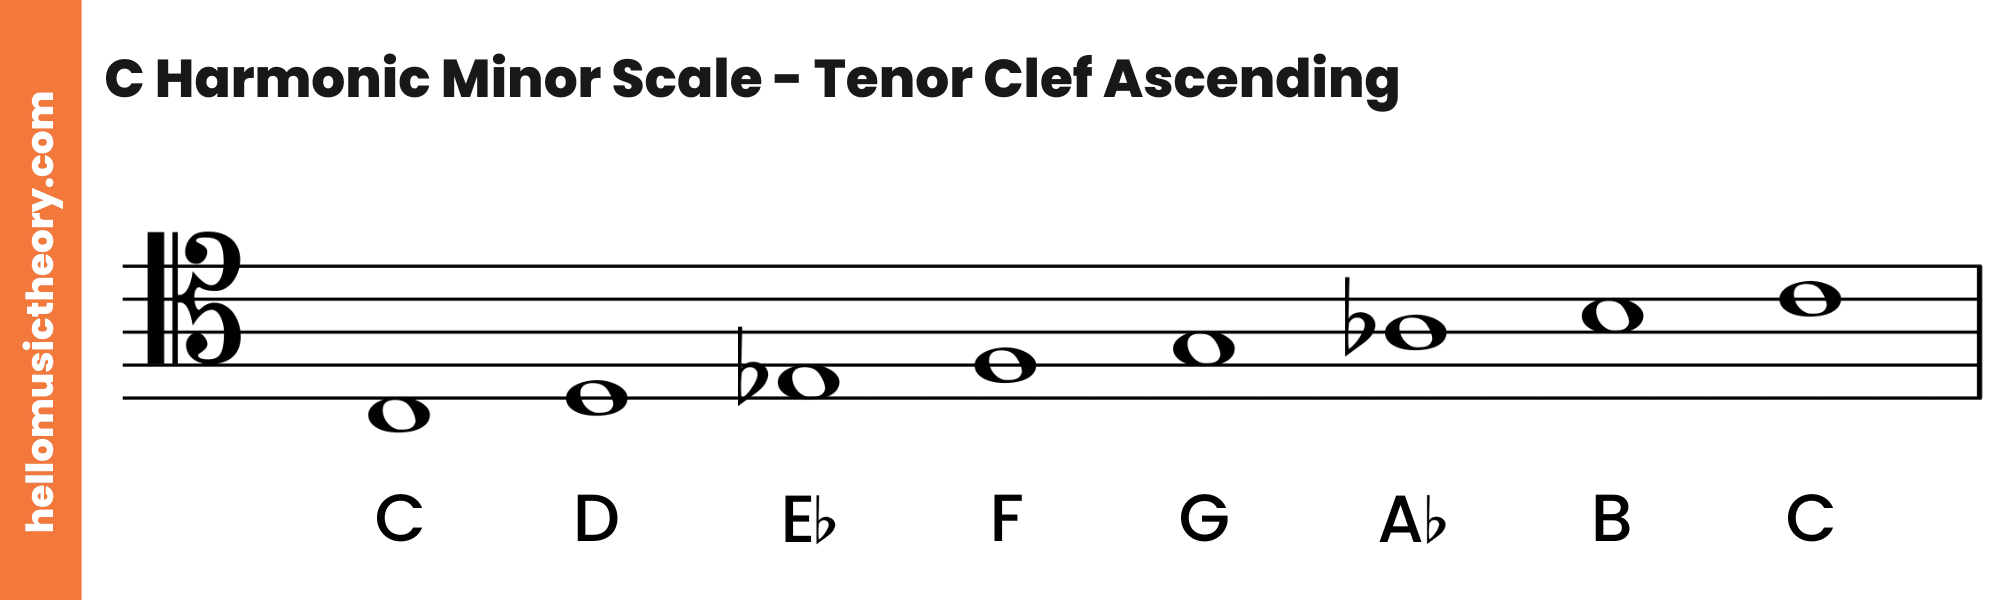 C Harmonic Minor Scale Tenor Clef Ascending